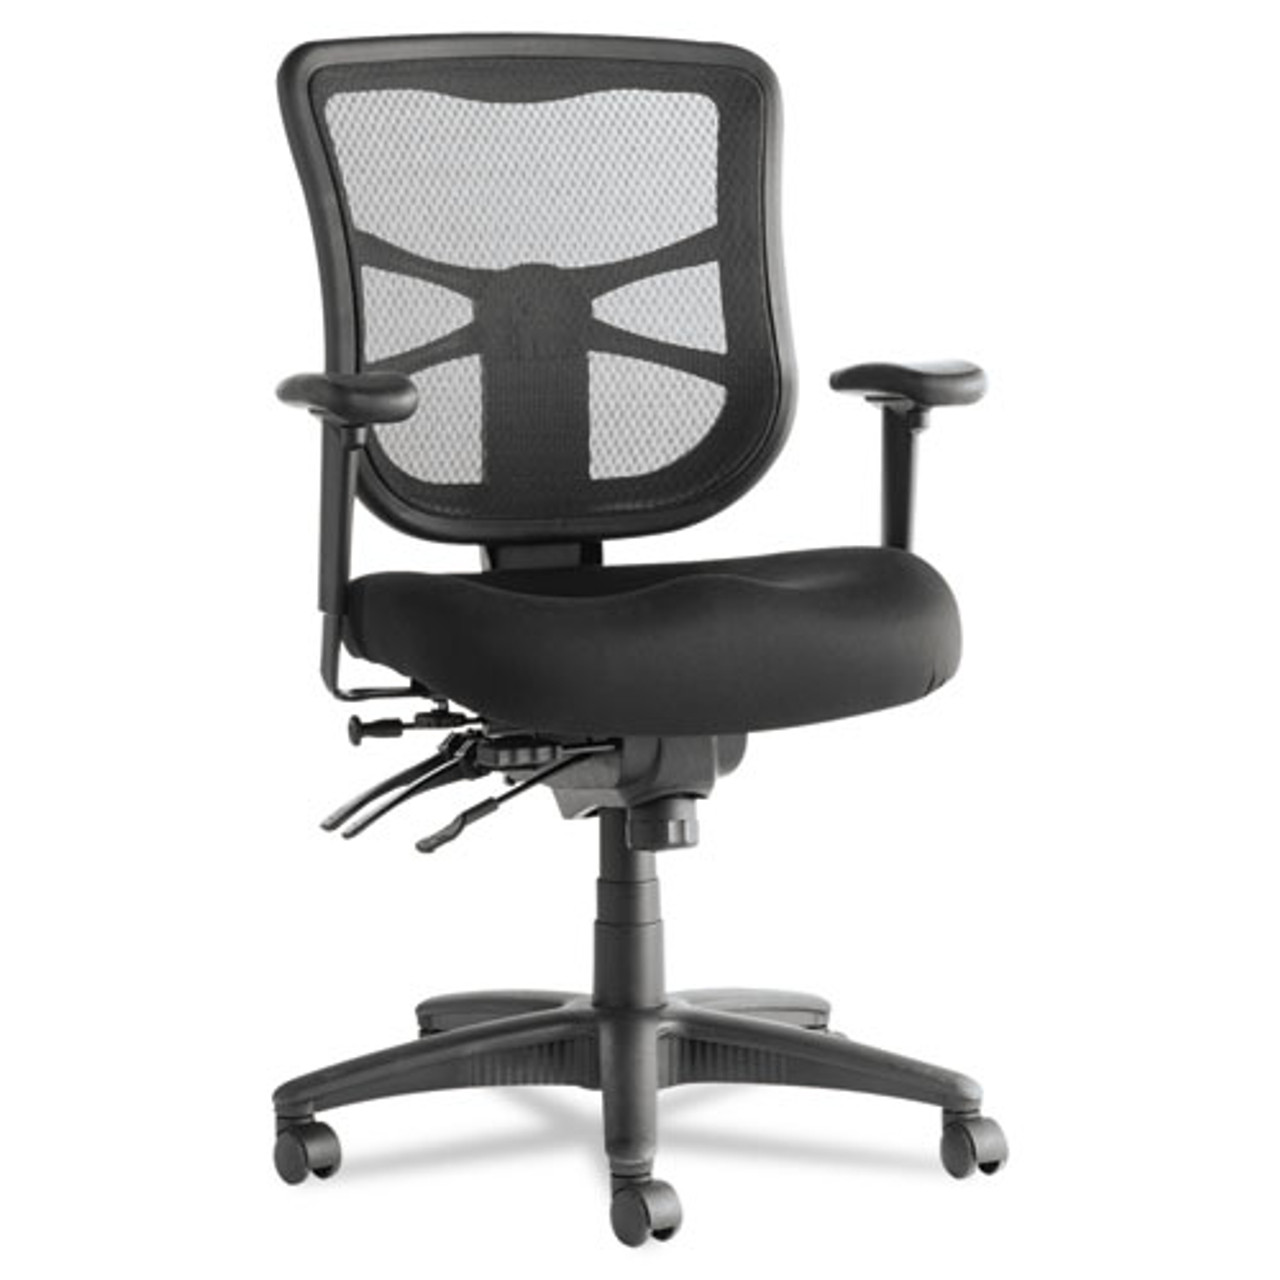 Alera Elusion Series Mesh Mid-Back Multifunction Chair, Black, #AL-1090